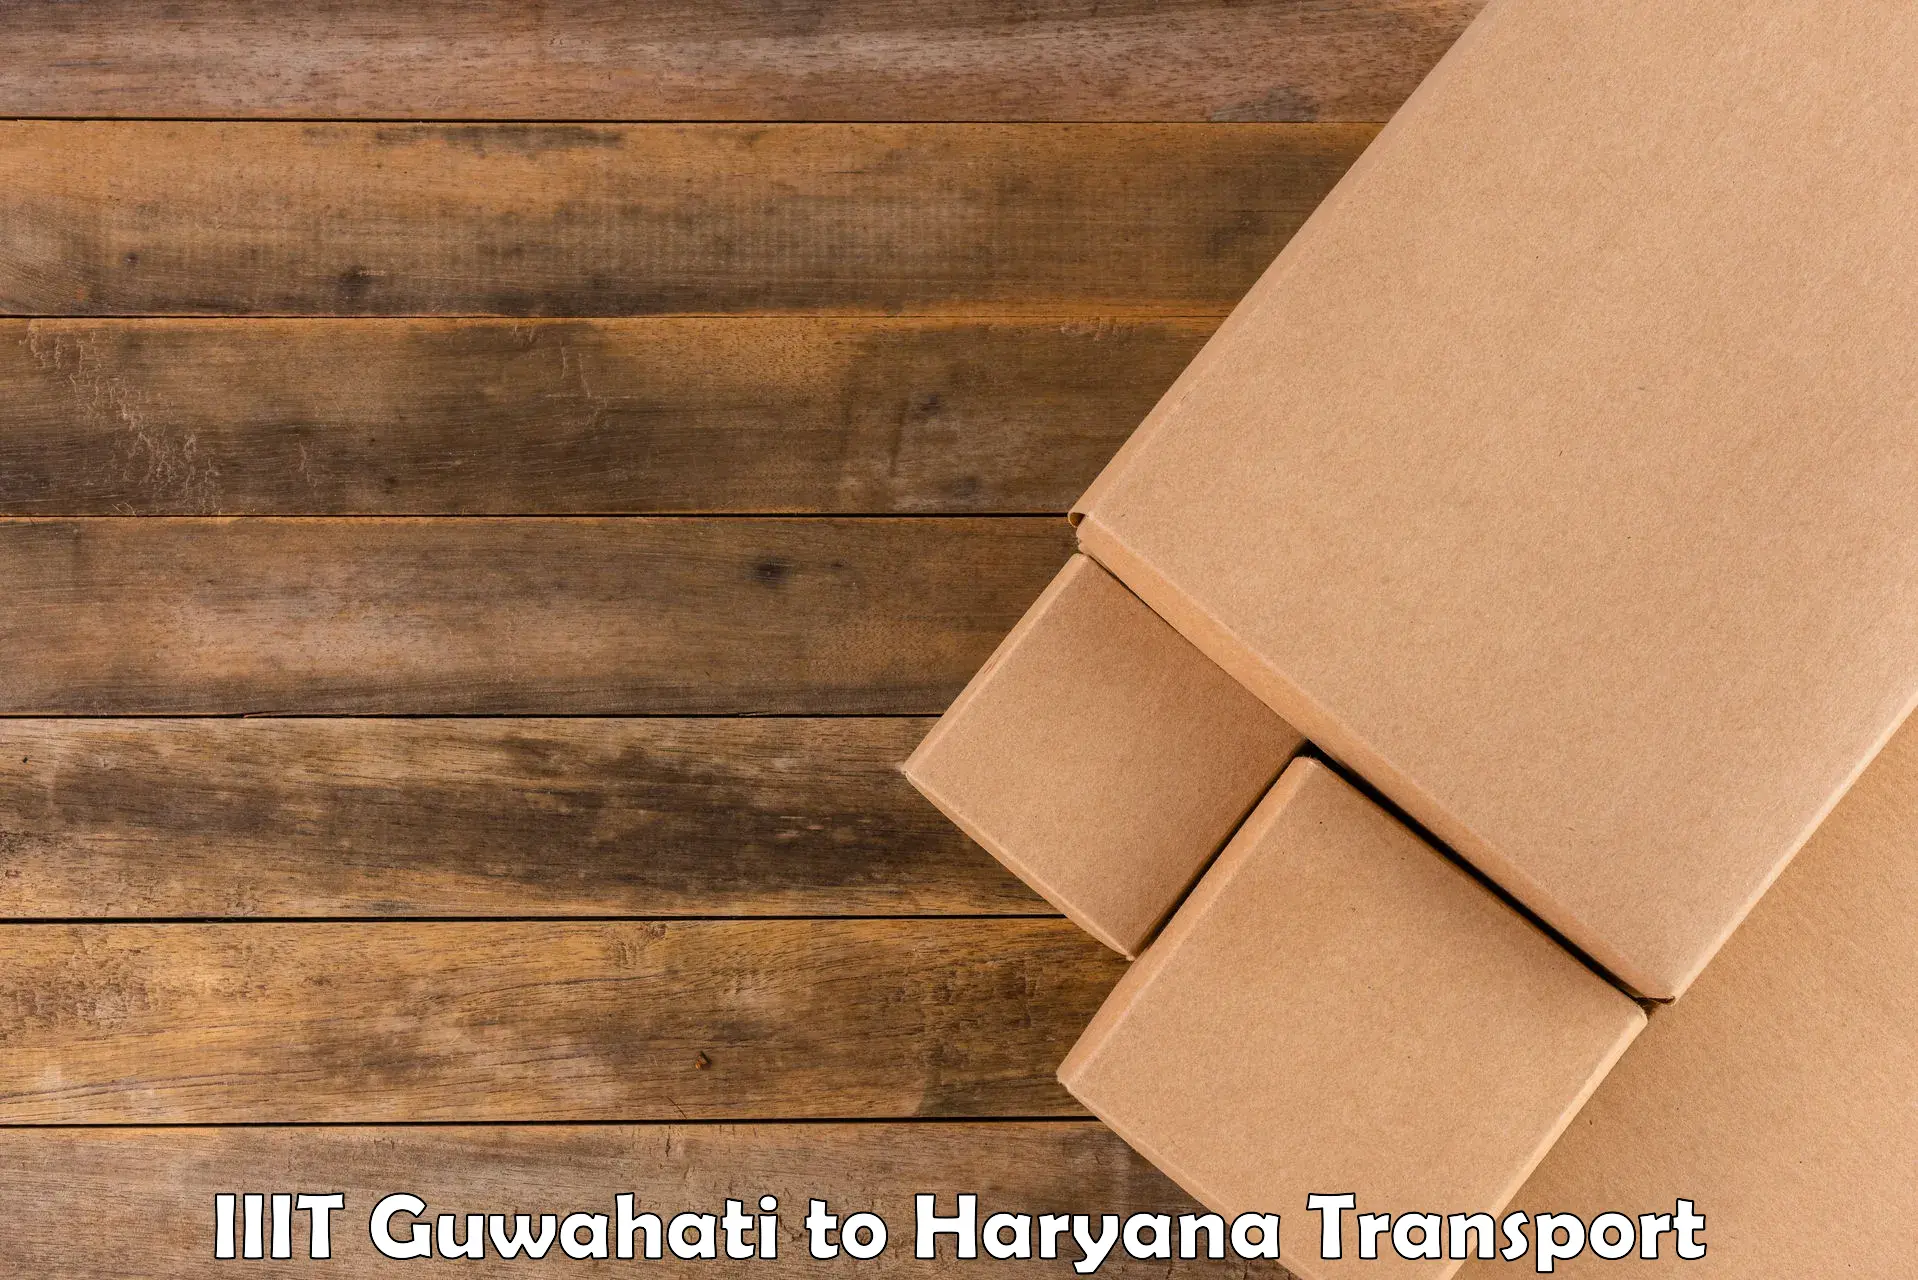 Daily transport service IIIT Guwahati to Gurgaon